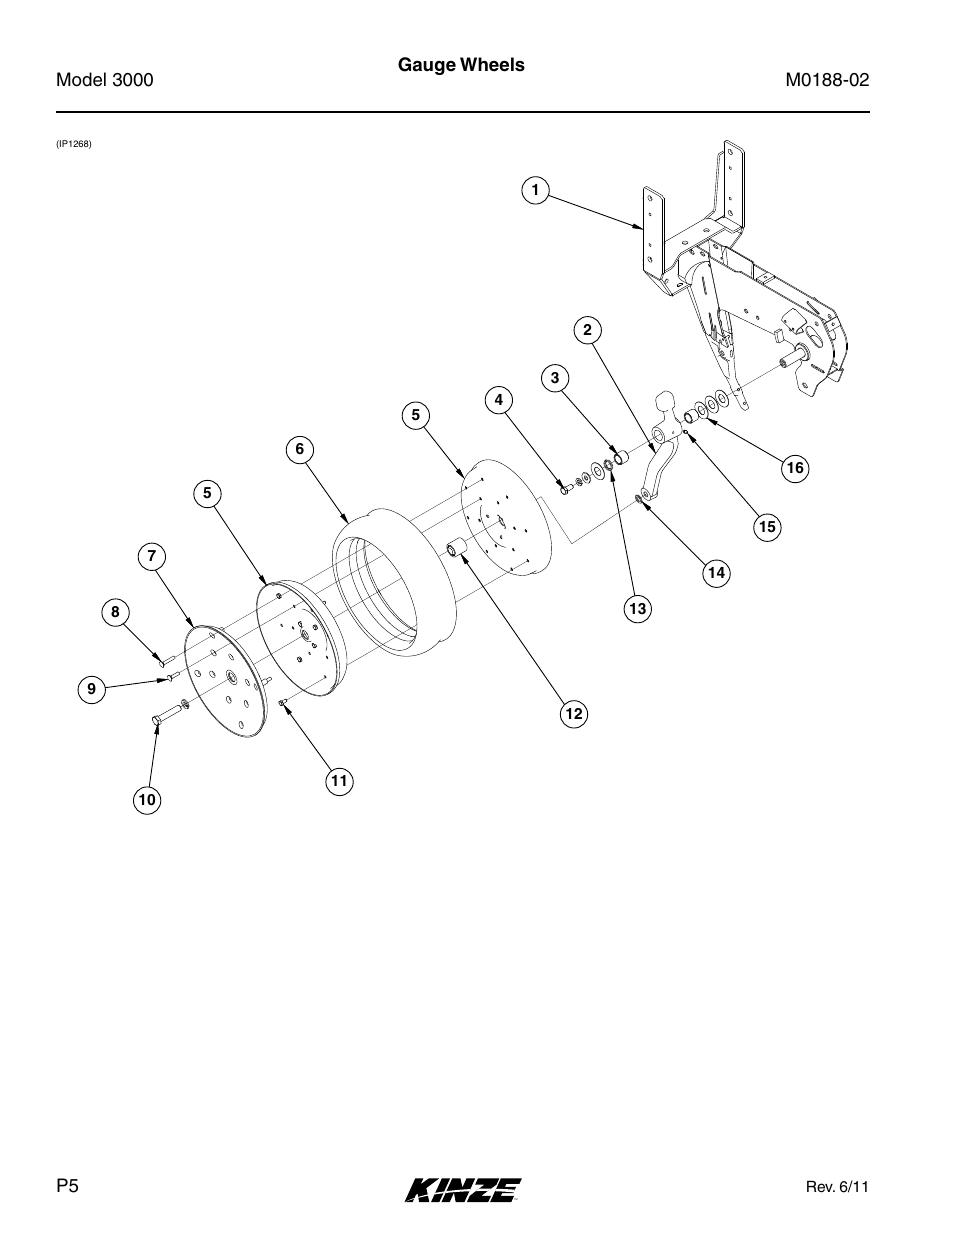 Gauge wheels, Rev. 6/11 | Kinze 3000 Rigid Frame Planter Rev. 5/14 User Manual | Page 8 / 154